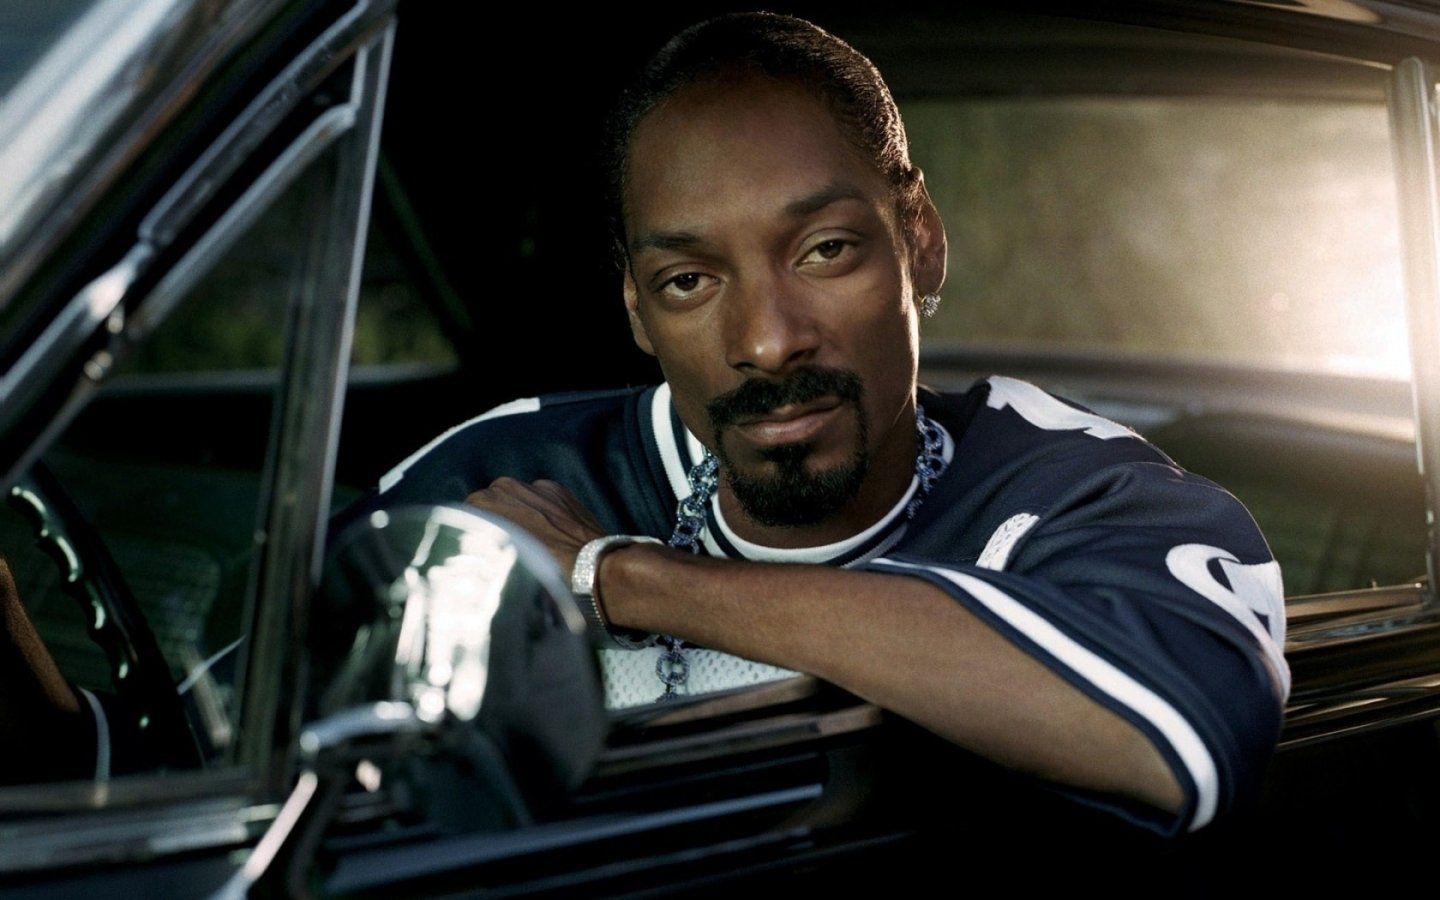 Snoop Dogg Wallpapers